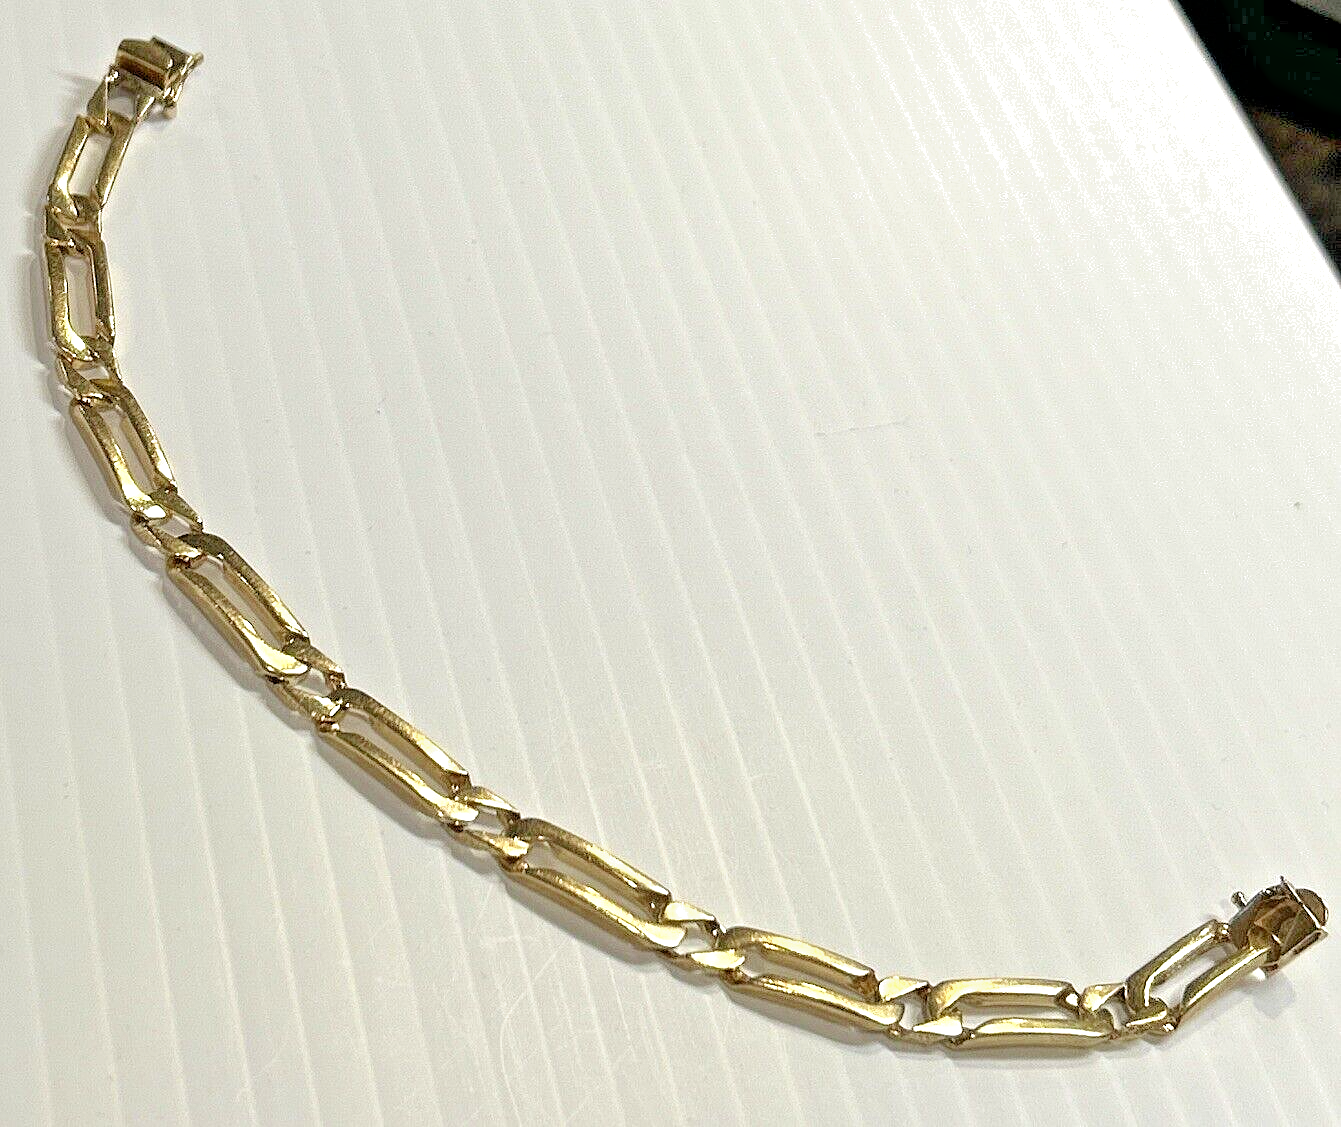 14k Gold Figaro Link Bracelet - 8" - 17.9 Grams - 6.4mm